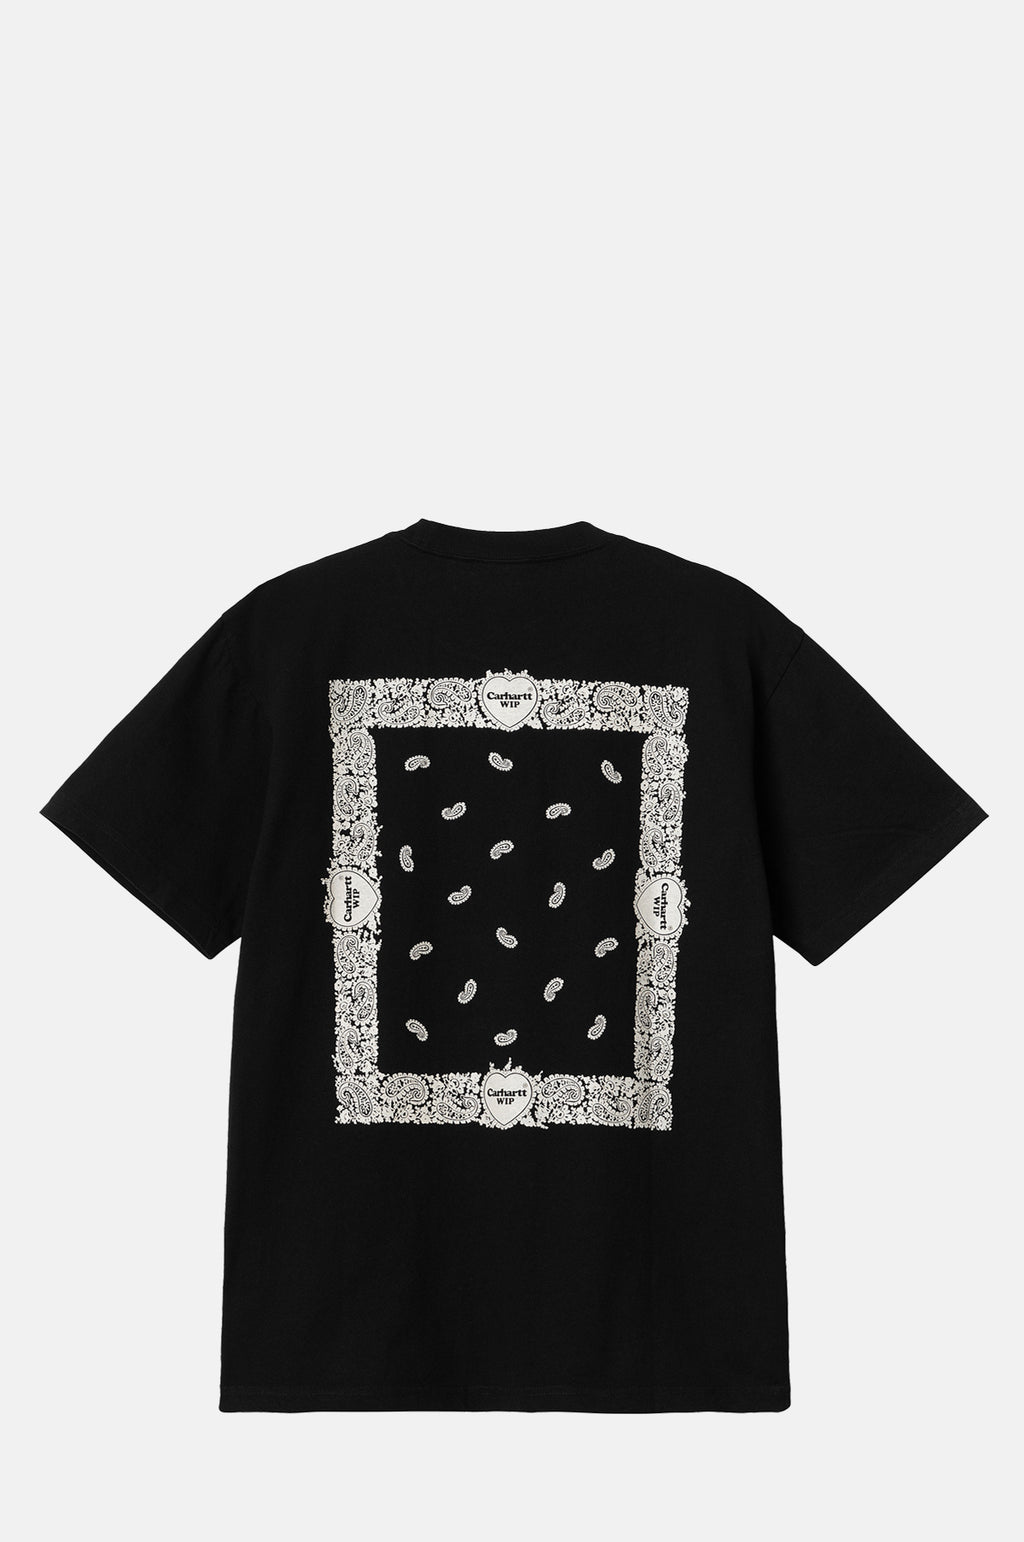 Carhartt S/S Paisley T-Shirt in Black / Wax – The Hambledon